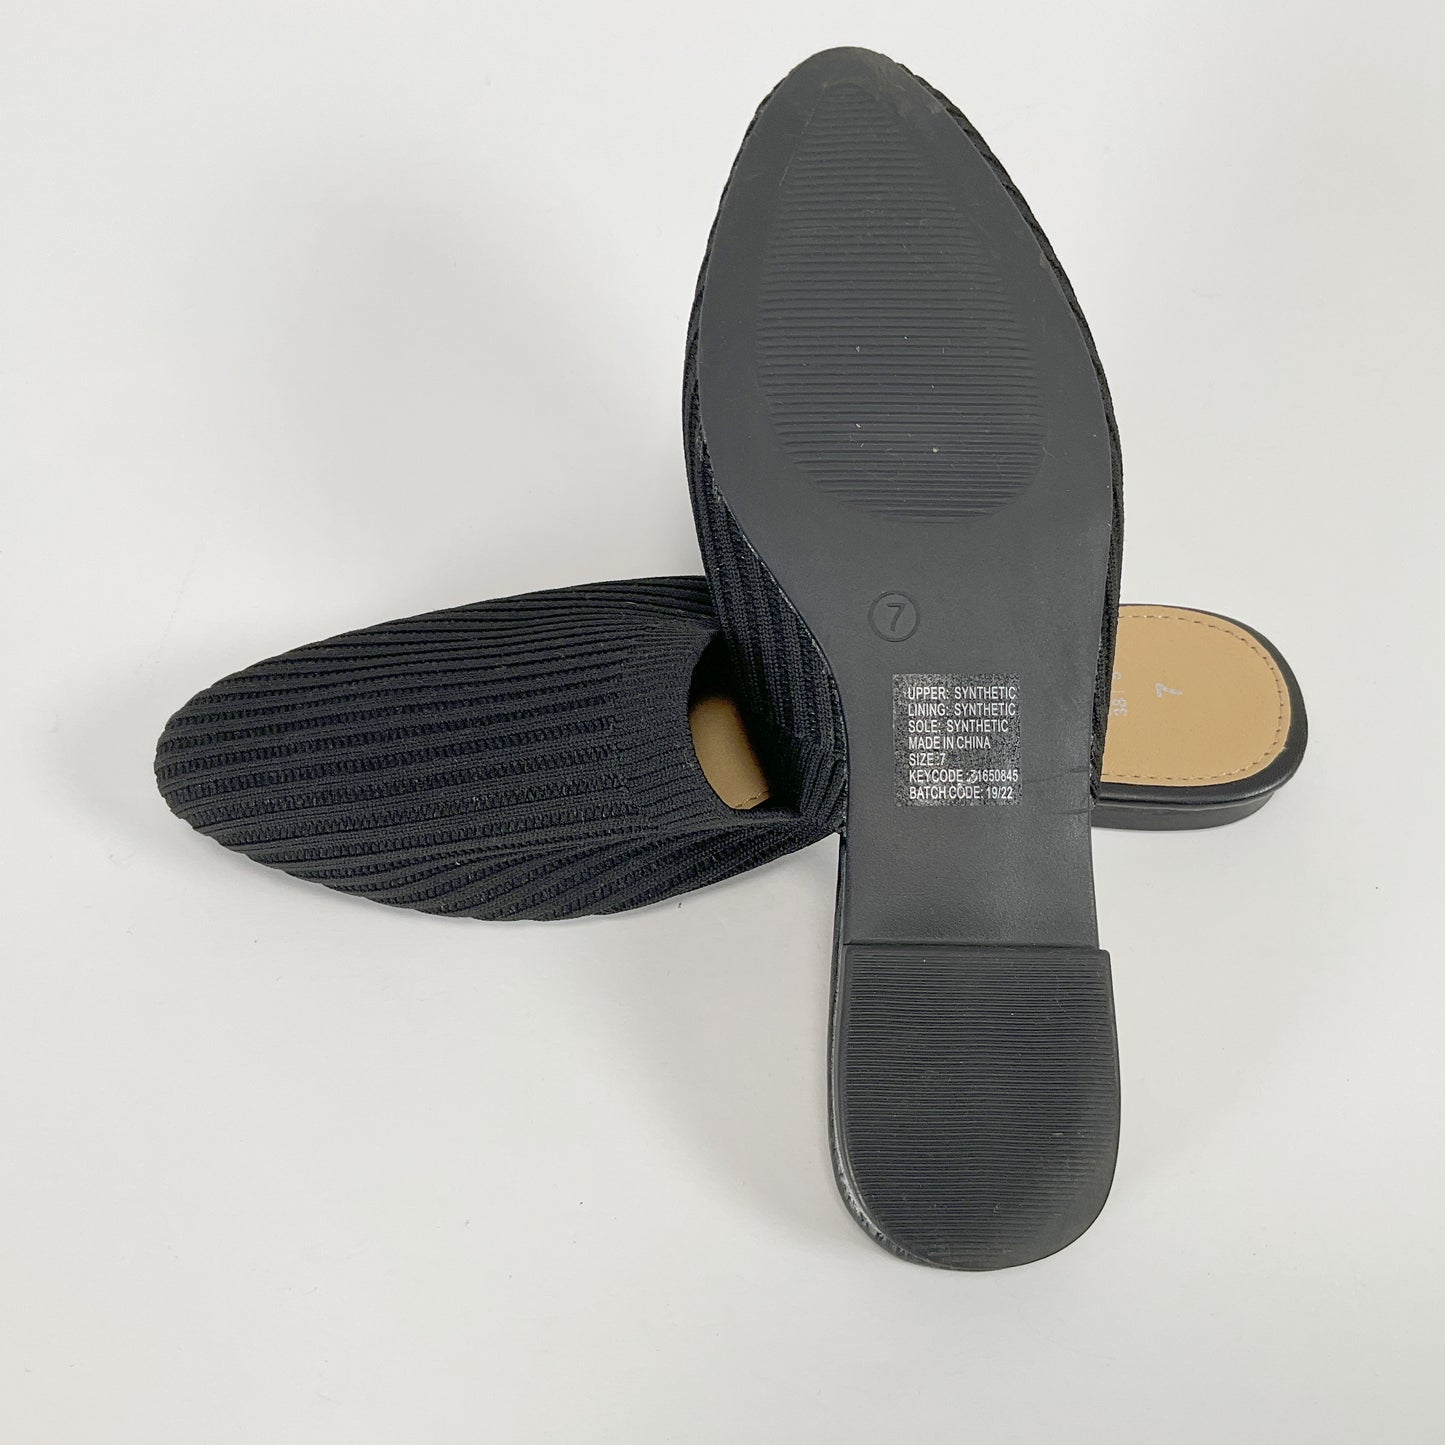 Anko - Black Women's Sandals